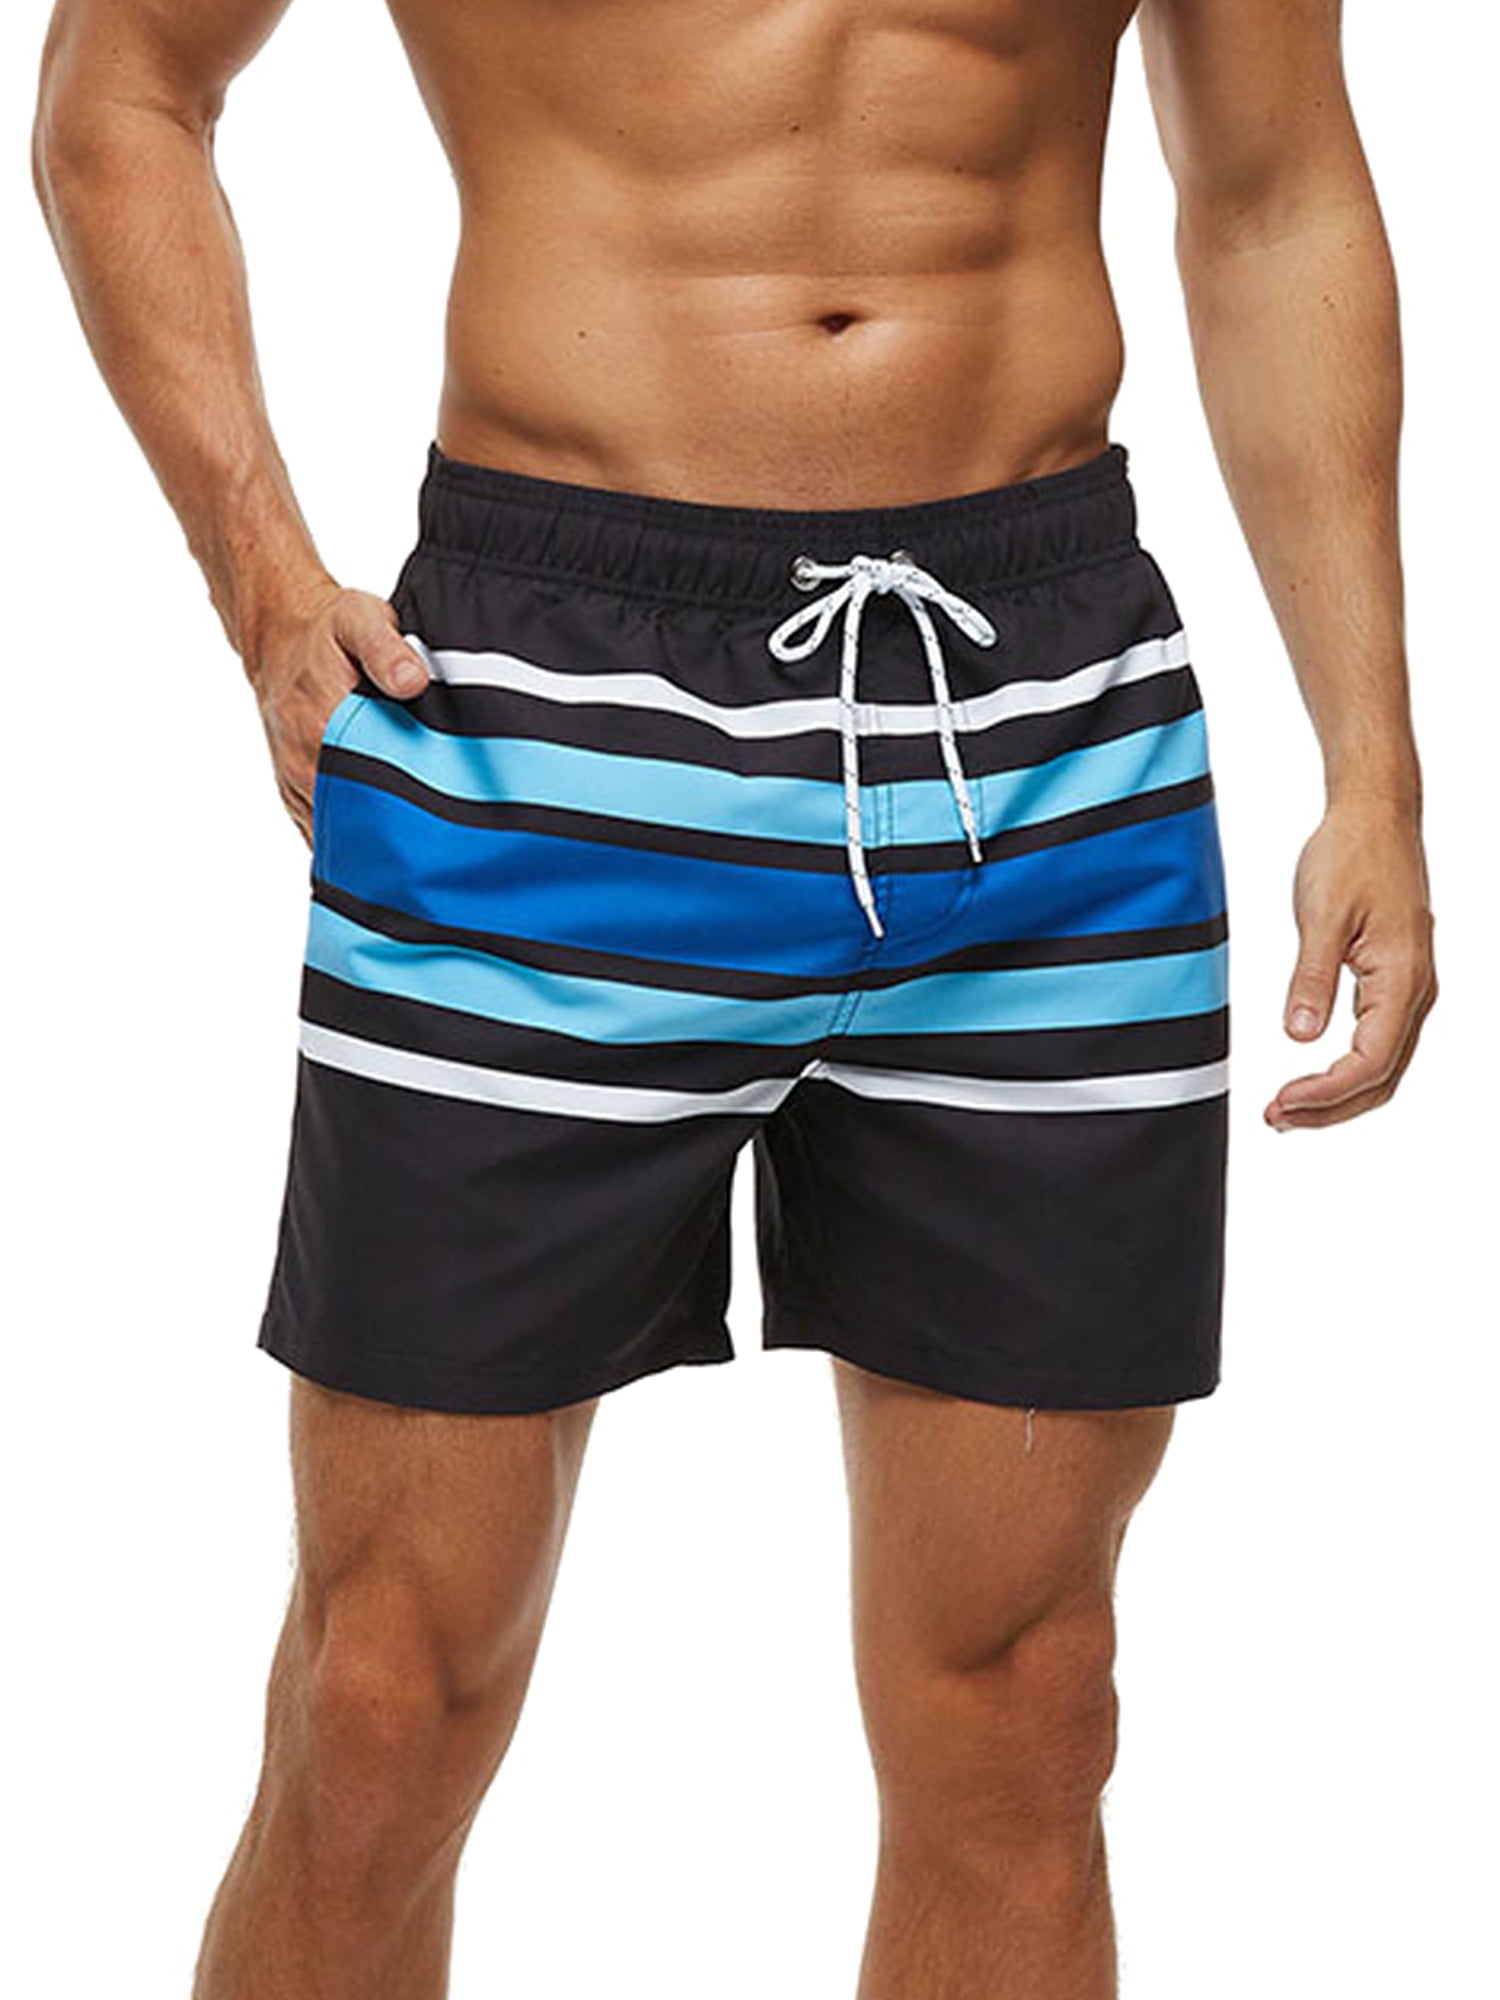 visesunny Men's Novelty Beach Shorts Quick Dry Swimwear Sports Running Swim Board Shorts Bathing Suits Mesh Lining 